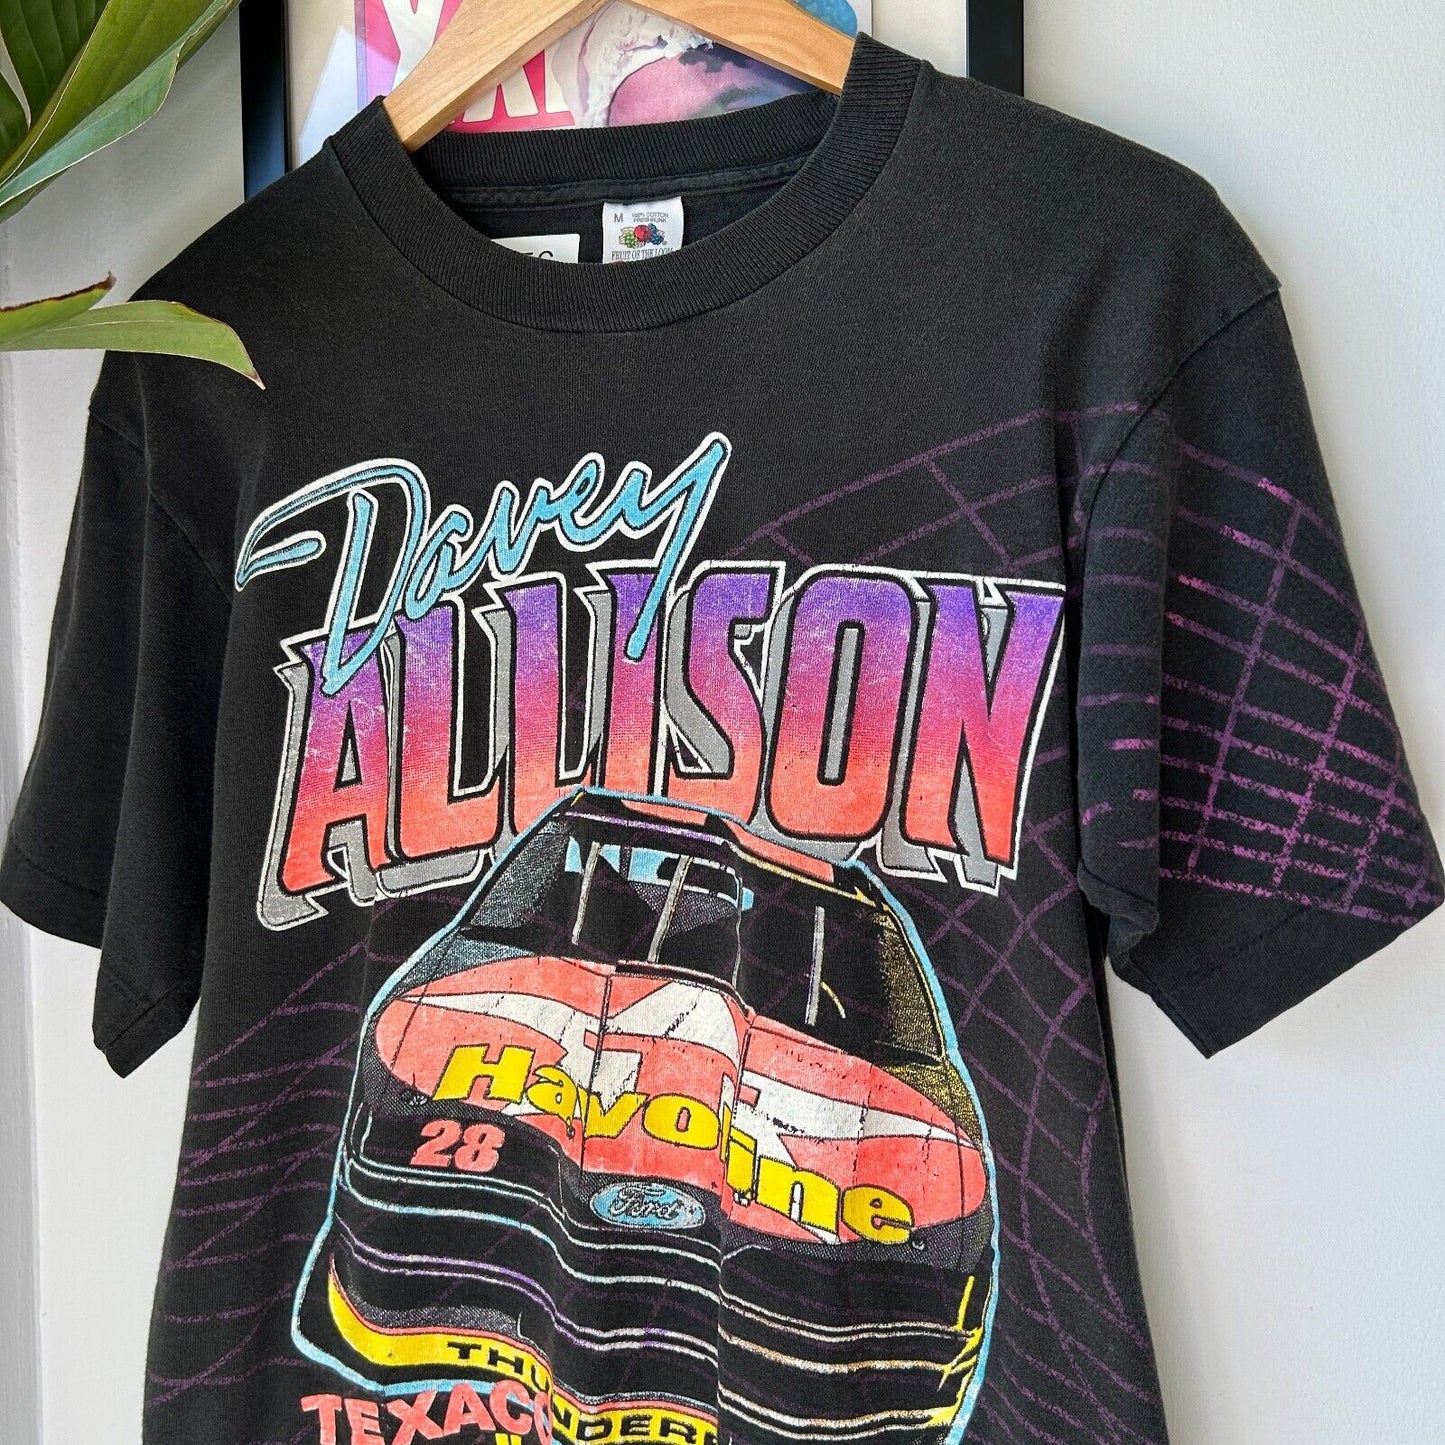 VINTAGE 1992 | Davey Allison Texaco Racing Big Car Graphic T-Shirt sz S Adult